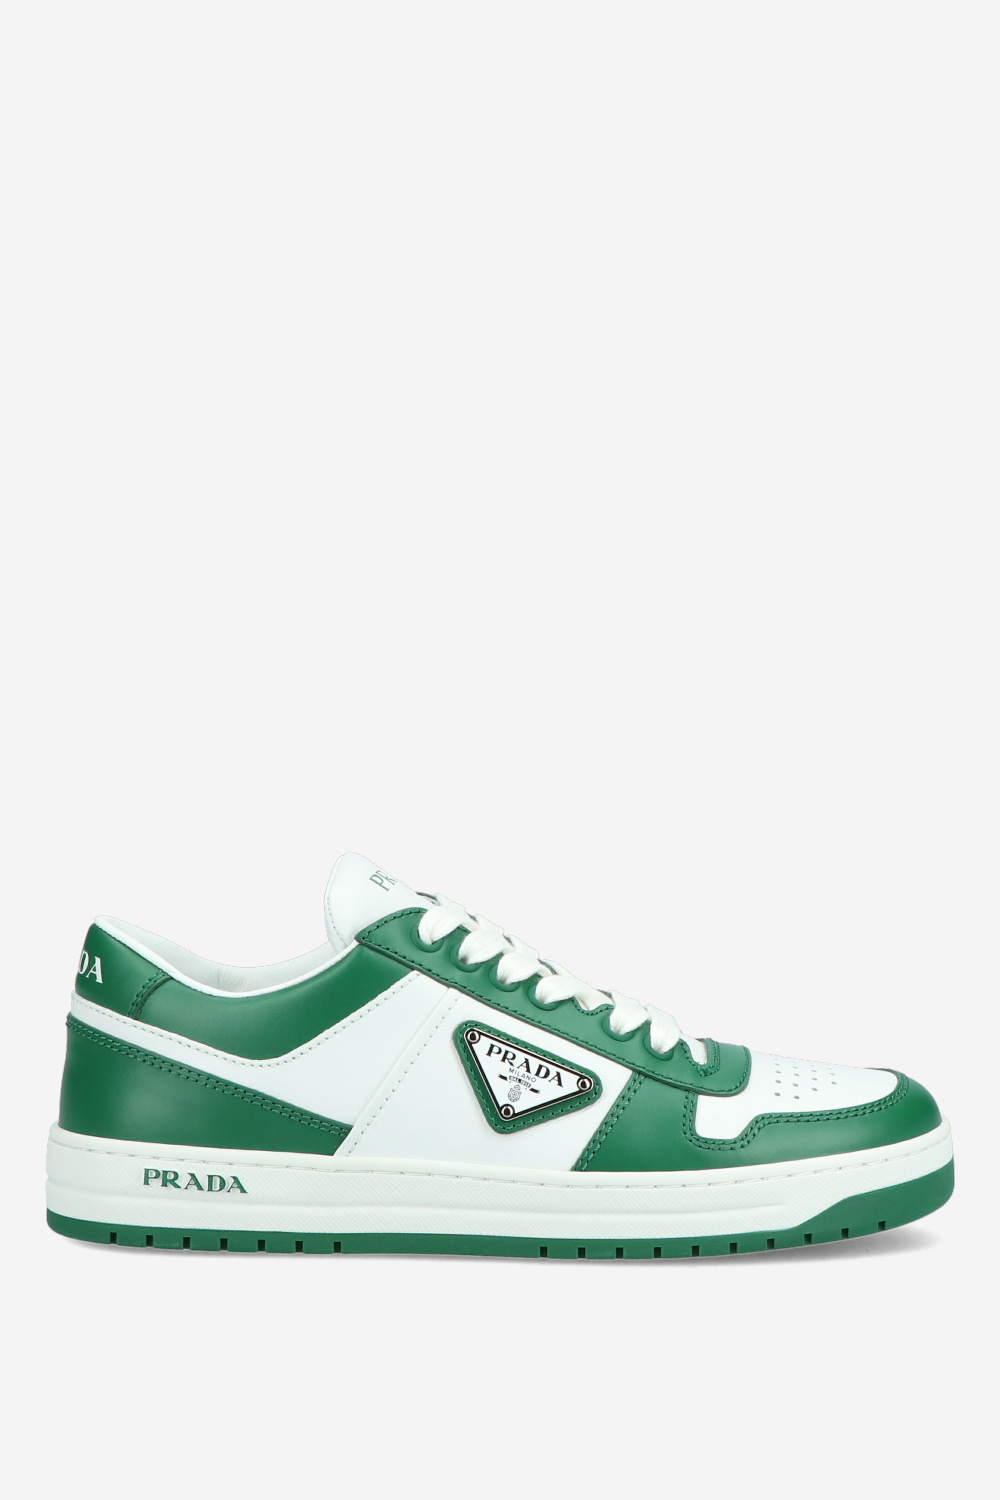 Prada Sneaker Green